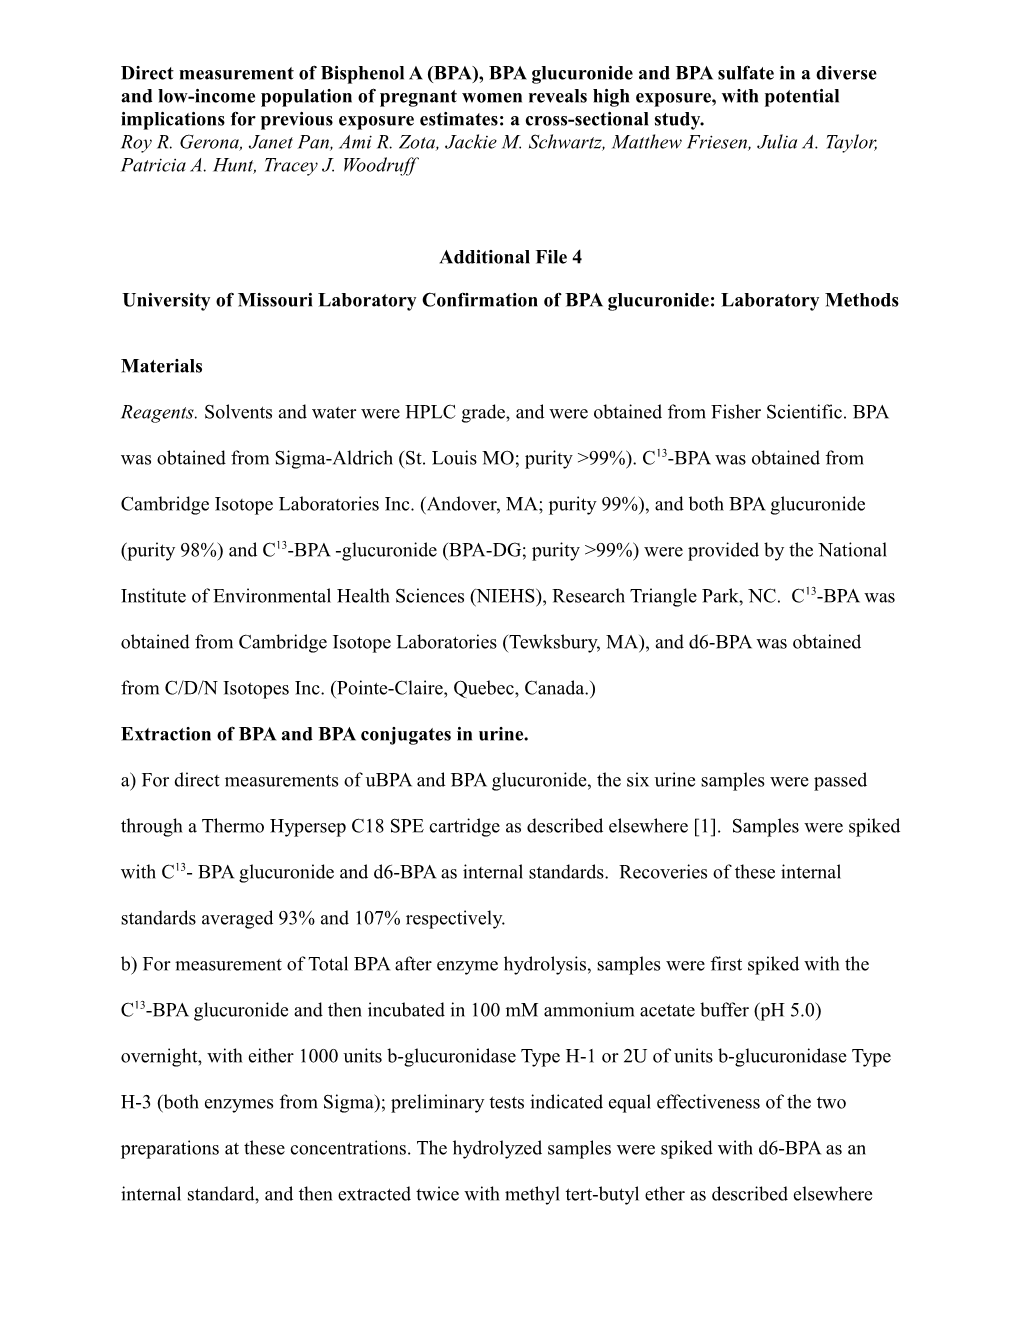 University of Missouri Laboratory Confirmation of BPA Glucuronide: Laboratory Methods